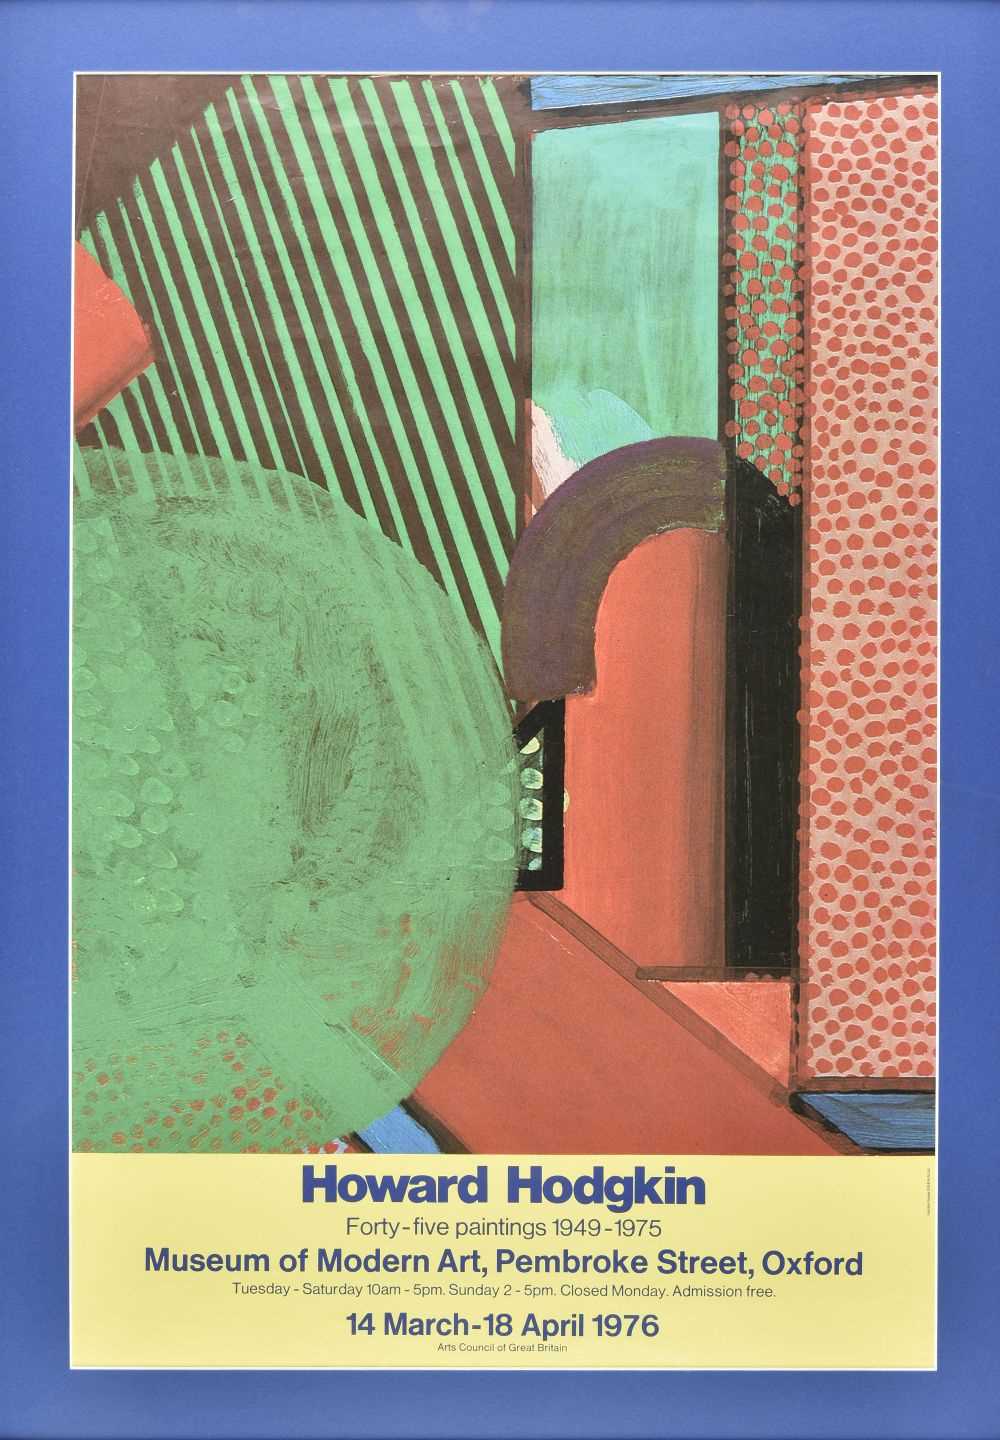 Lot 397 - Hodgkin (Howard, 1932-2017). Forty-Five Paintings 1949-1975, Museum of Modern Art, 1976